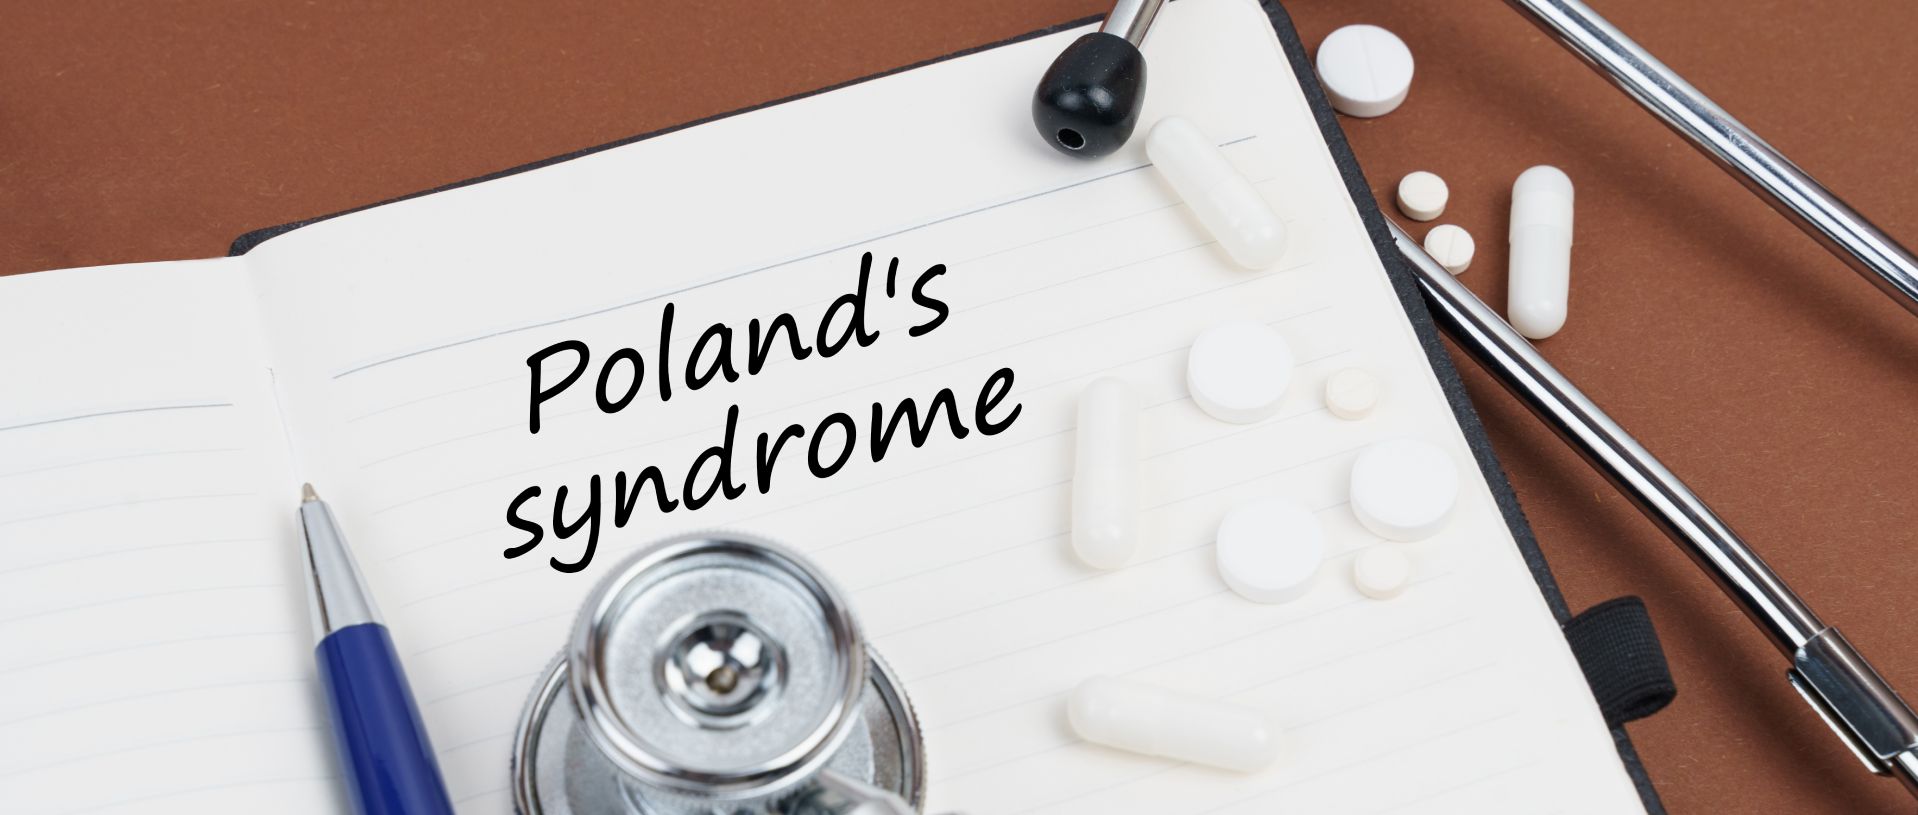 Poland’s syndrome treatment options